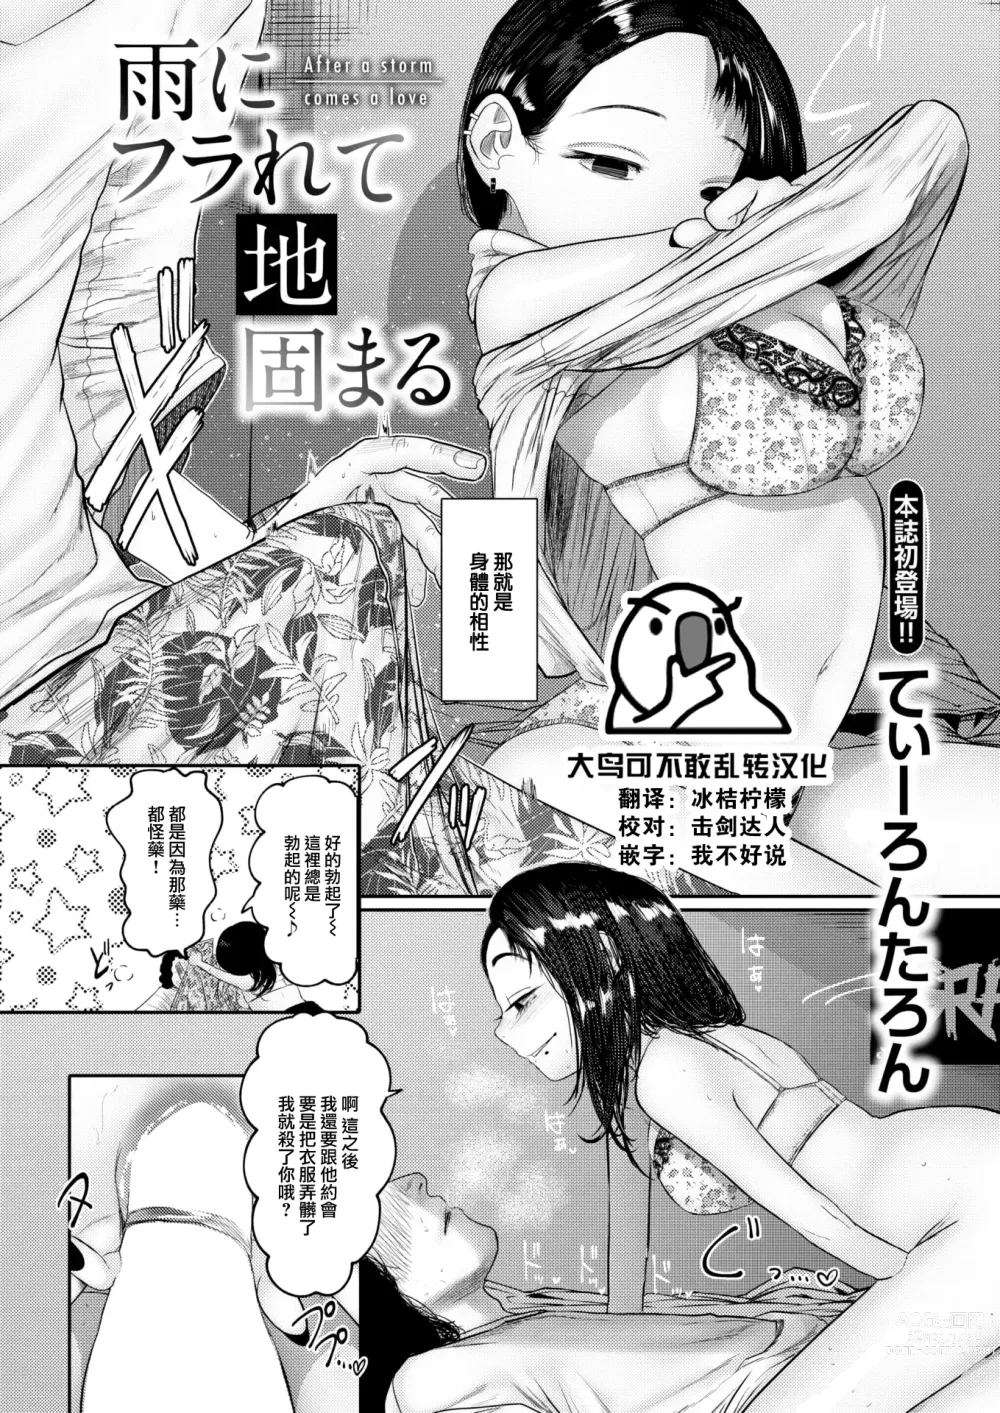 Page 1 of manga Ame ni Furarete Ji Katamaru - After a storm comes a love